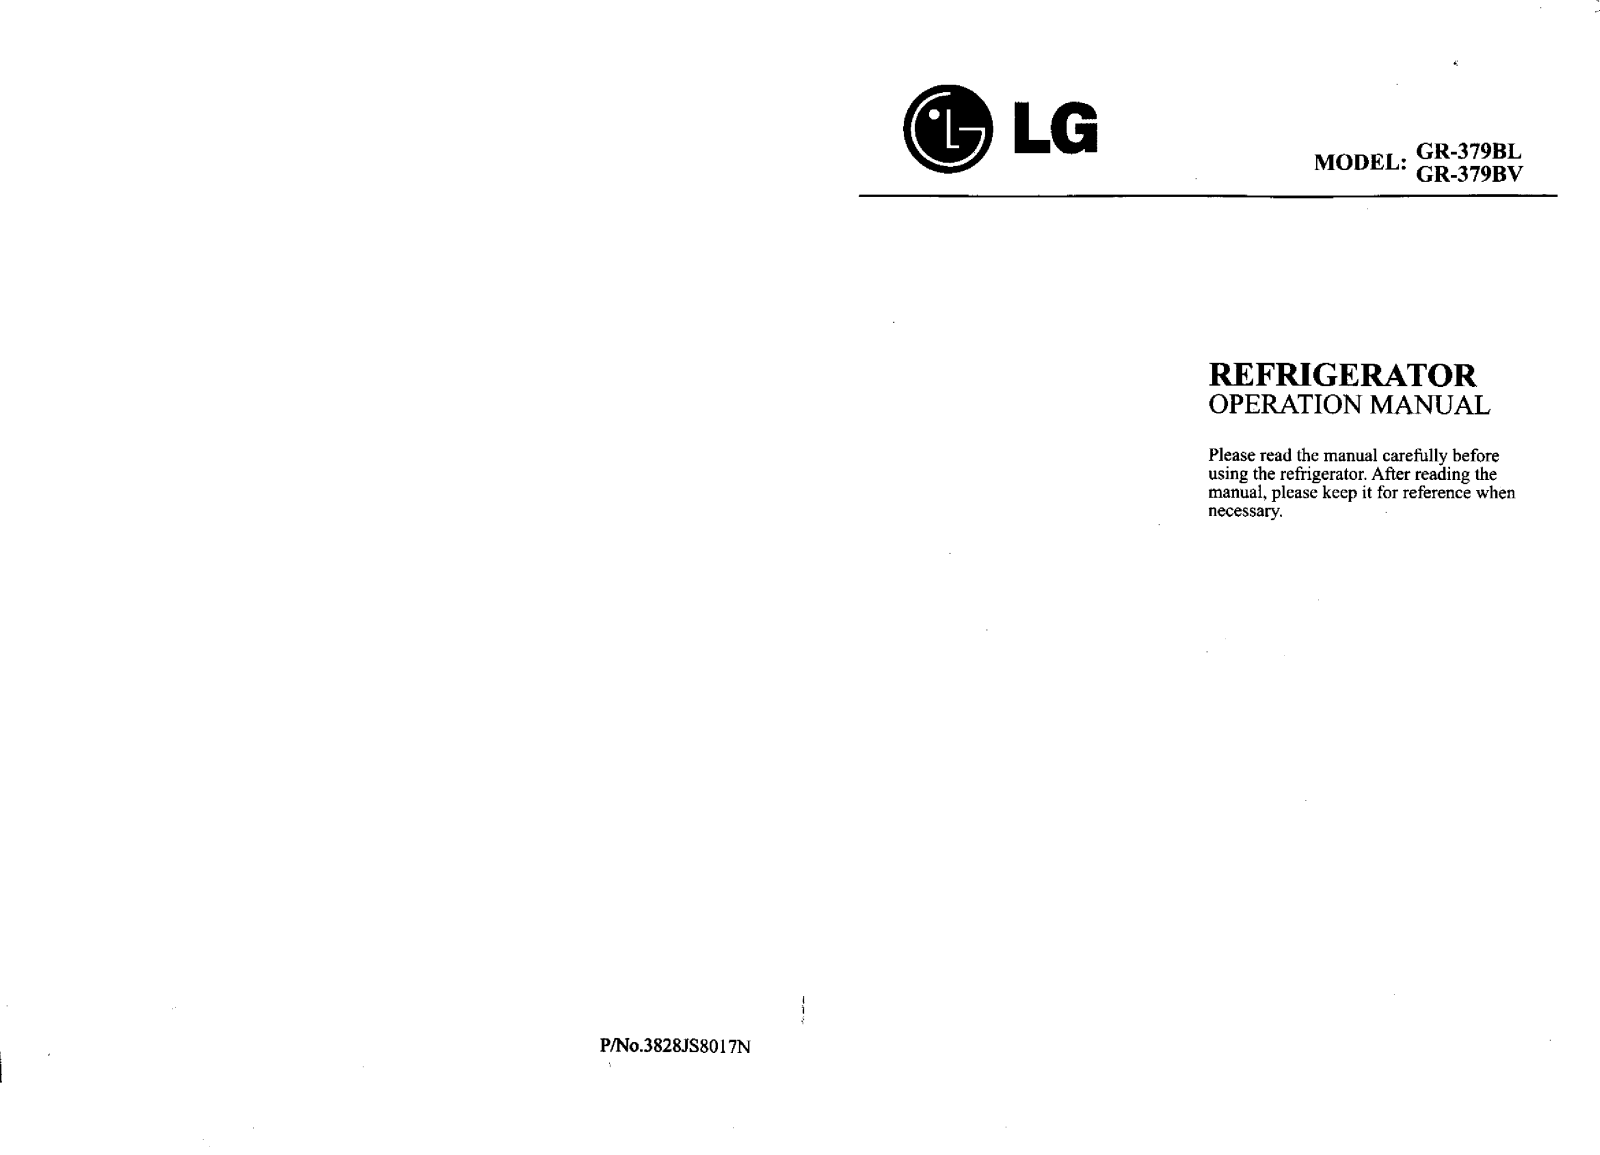 LG GR-379BV User Manual